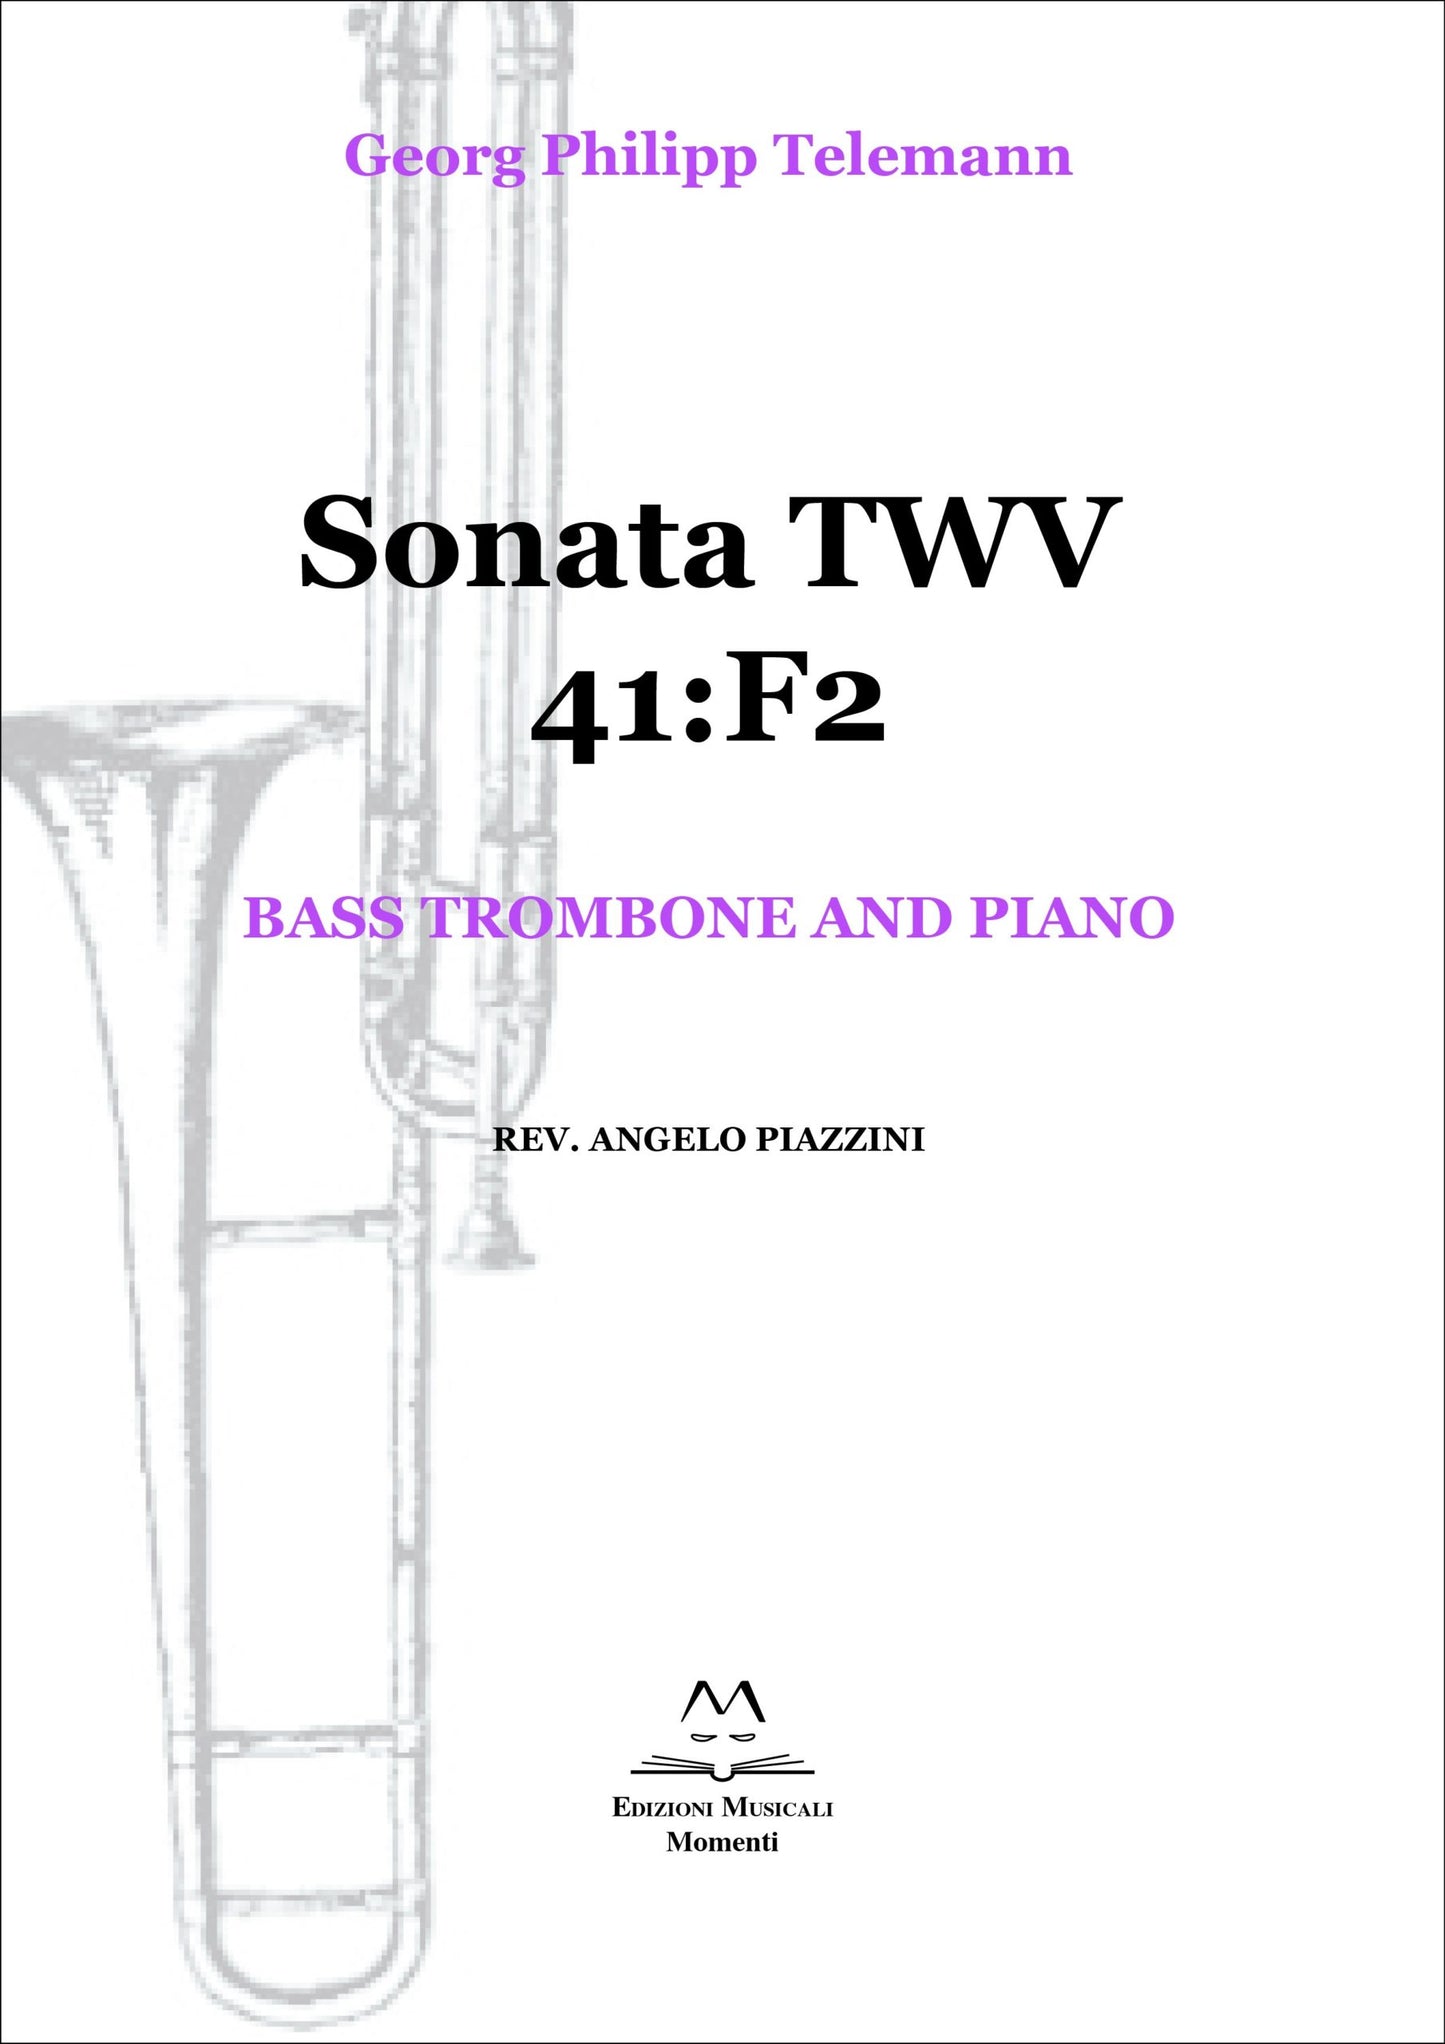 Sonata TWV 41:F2 - Bass trombone and piano rev. Angelo Piazzini